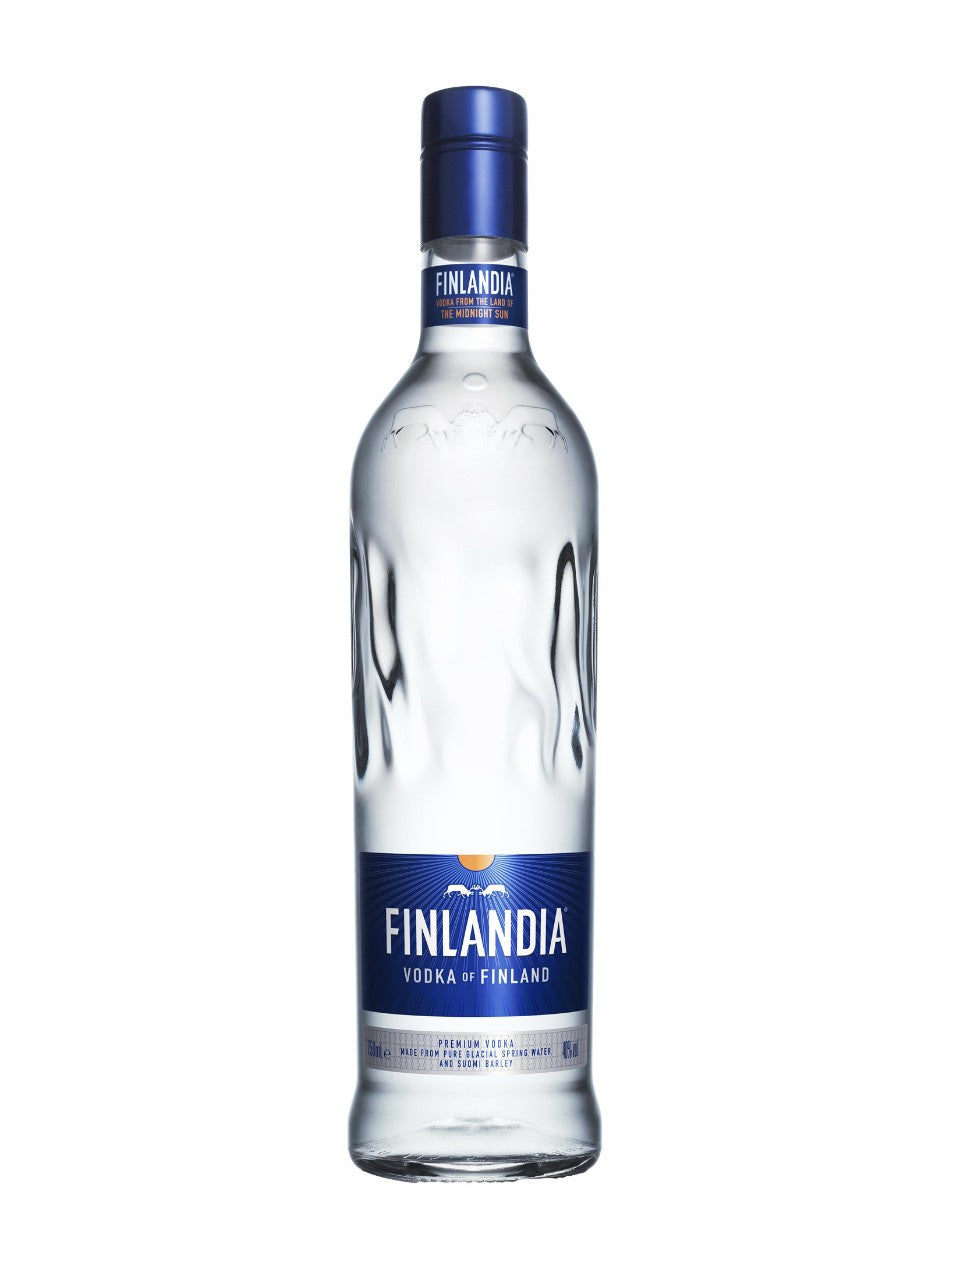 Finlandia Vodka 750 mL bottle